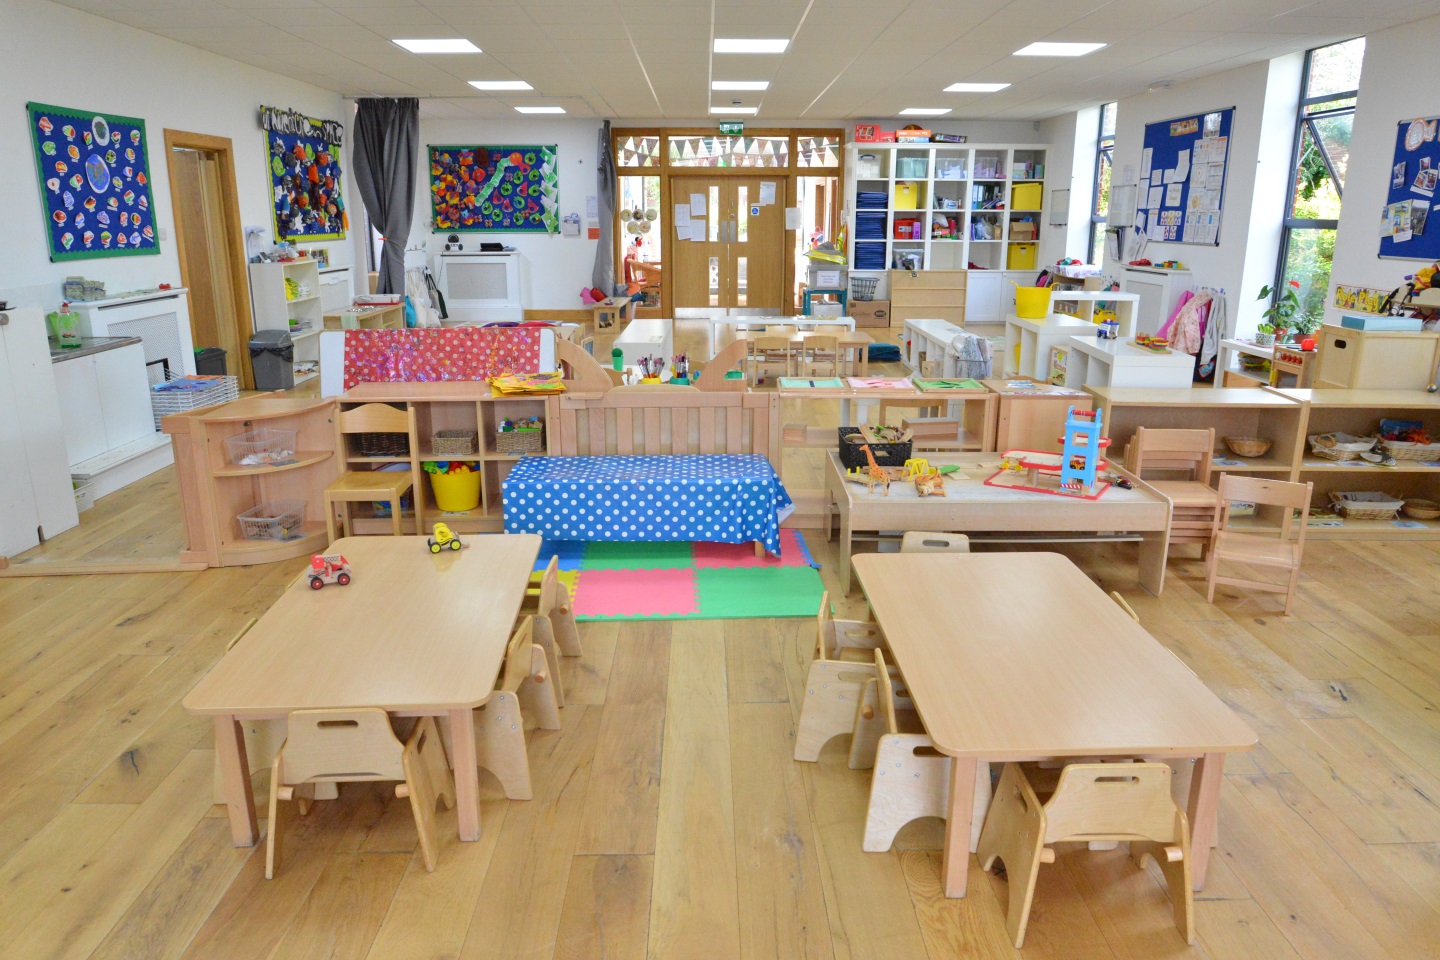 Bright Horizons Chantry Hall Day Nursery and Preschool London 020 3912 6011